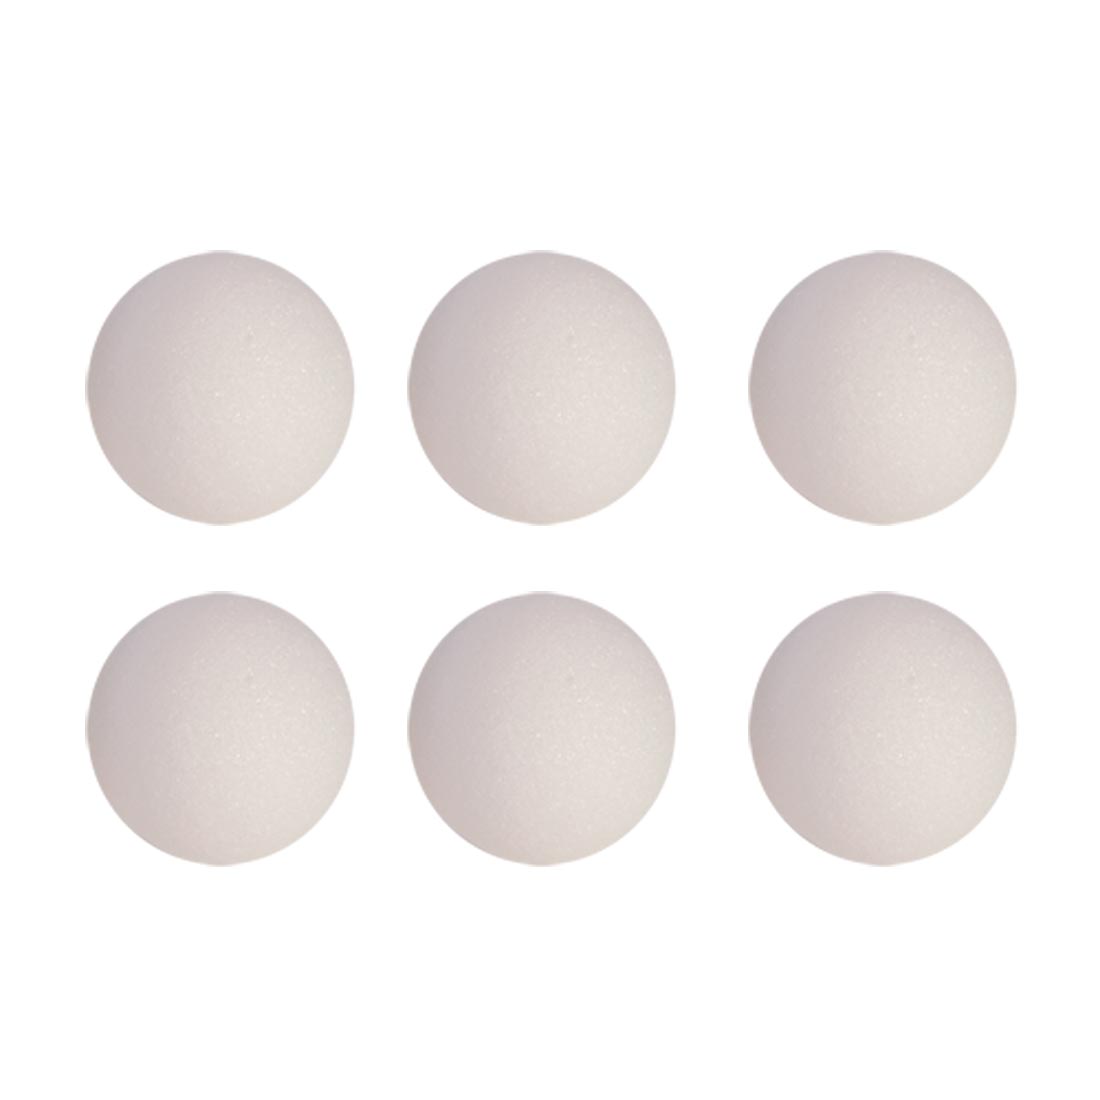 Six White craft foam Balls